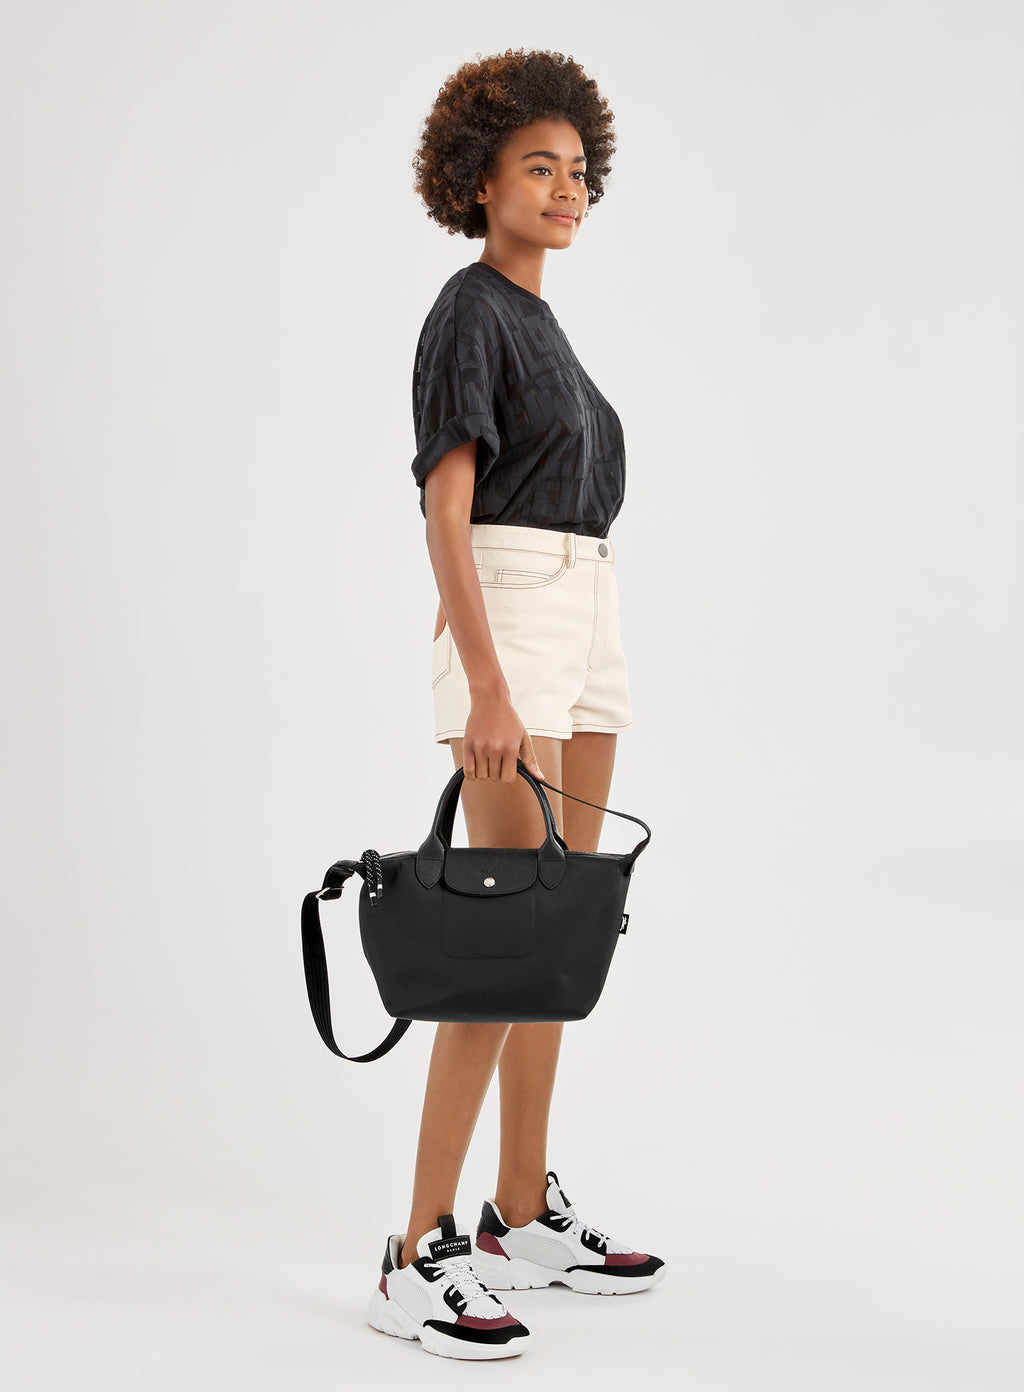 Longchamp Le Pliage Recycled Canvas Medium Top Handle Bag, Graphite at John  Lewis & Partners